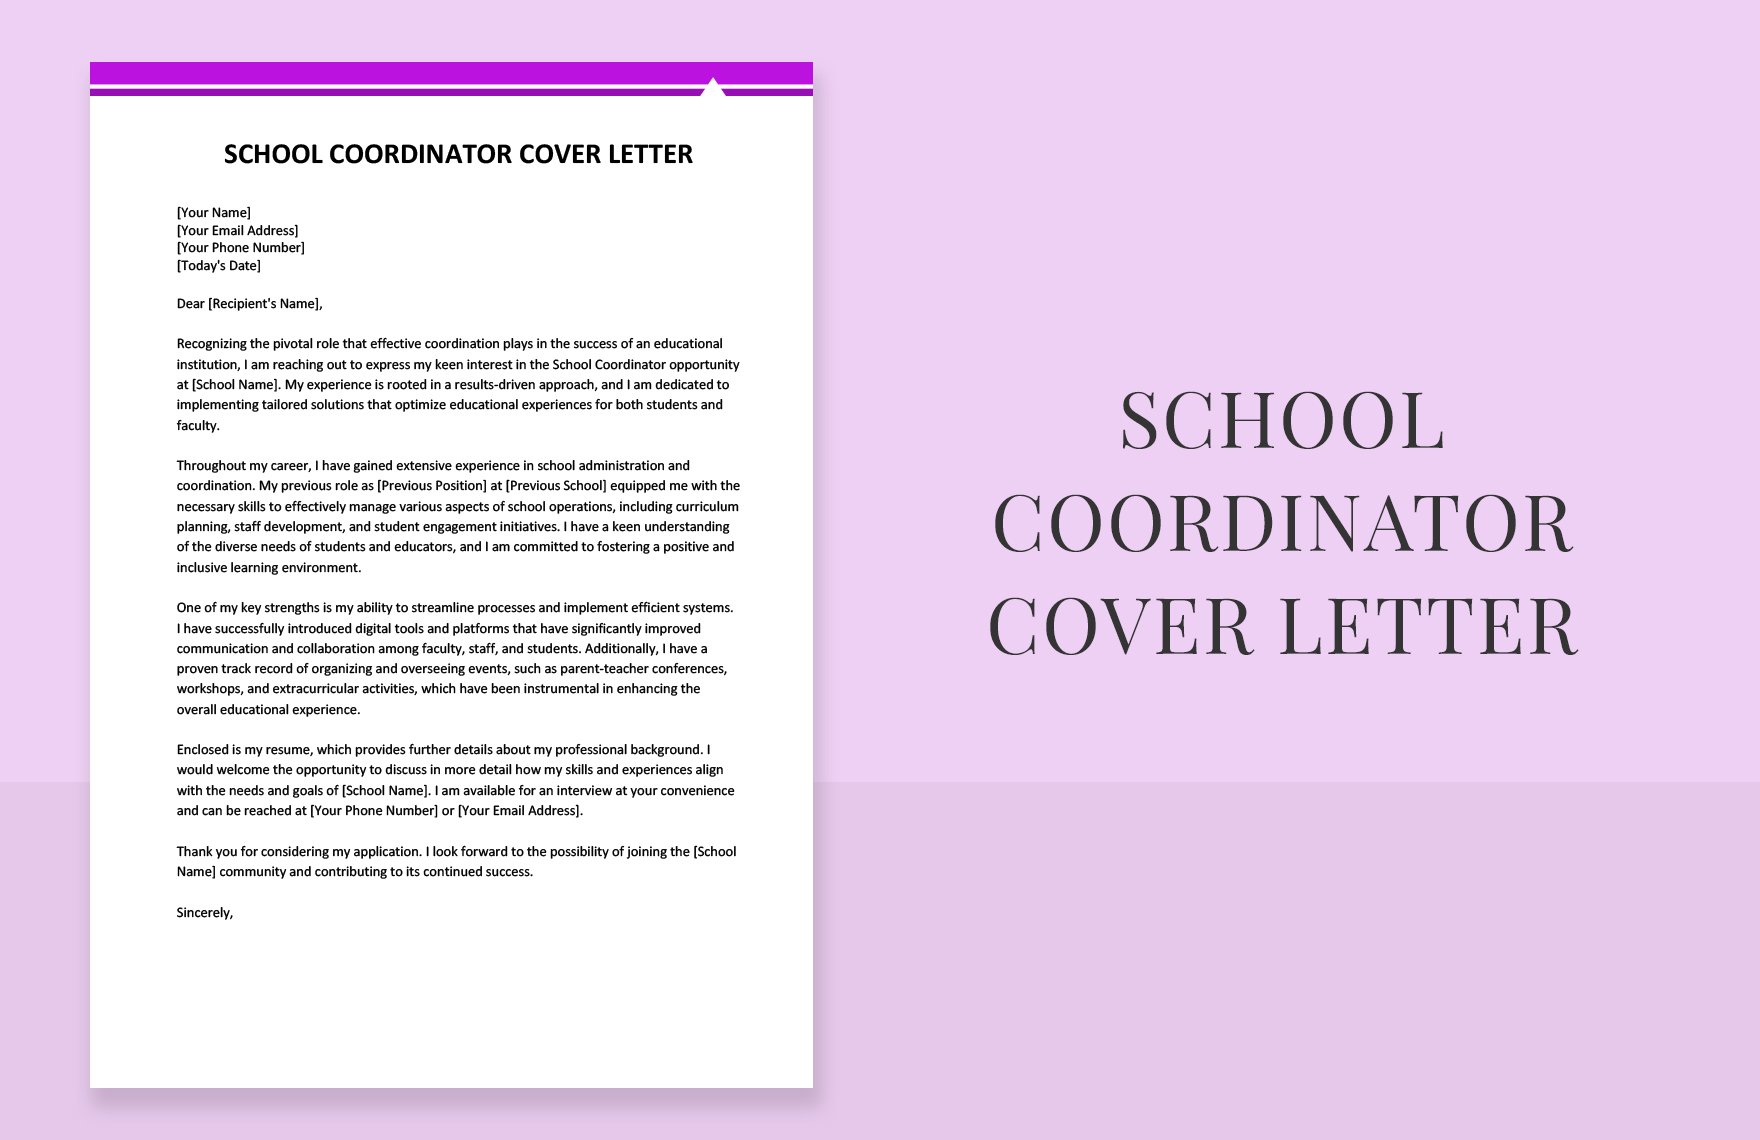 School Coordinator Cover Letter